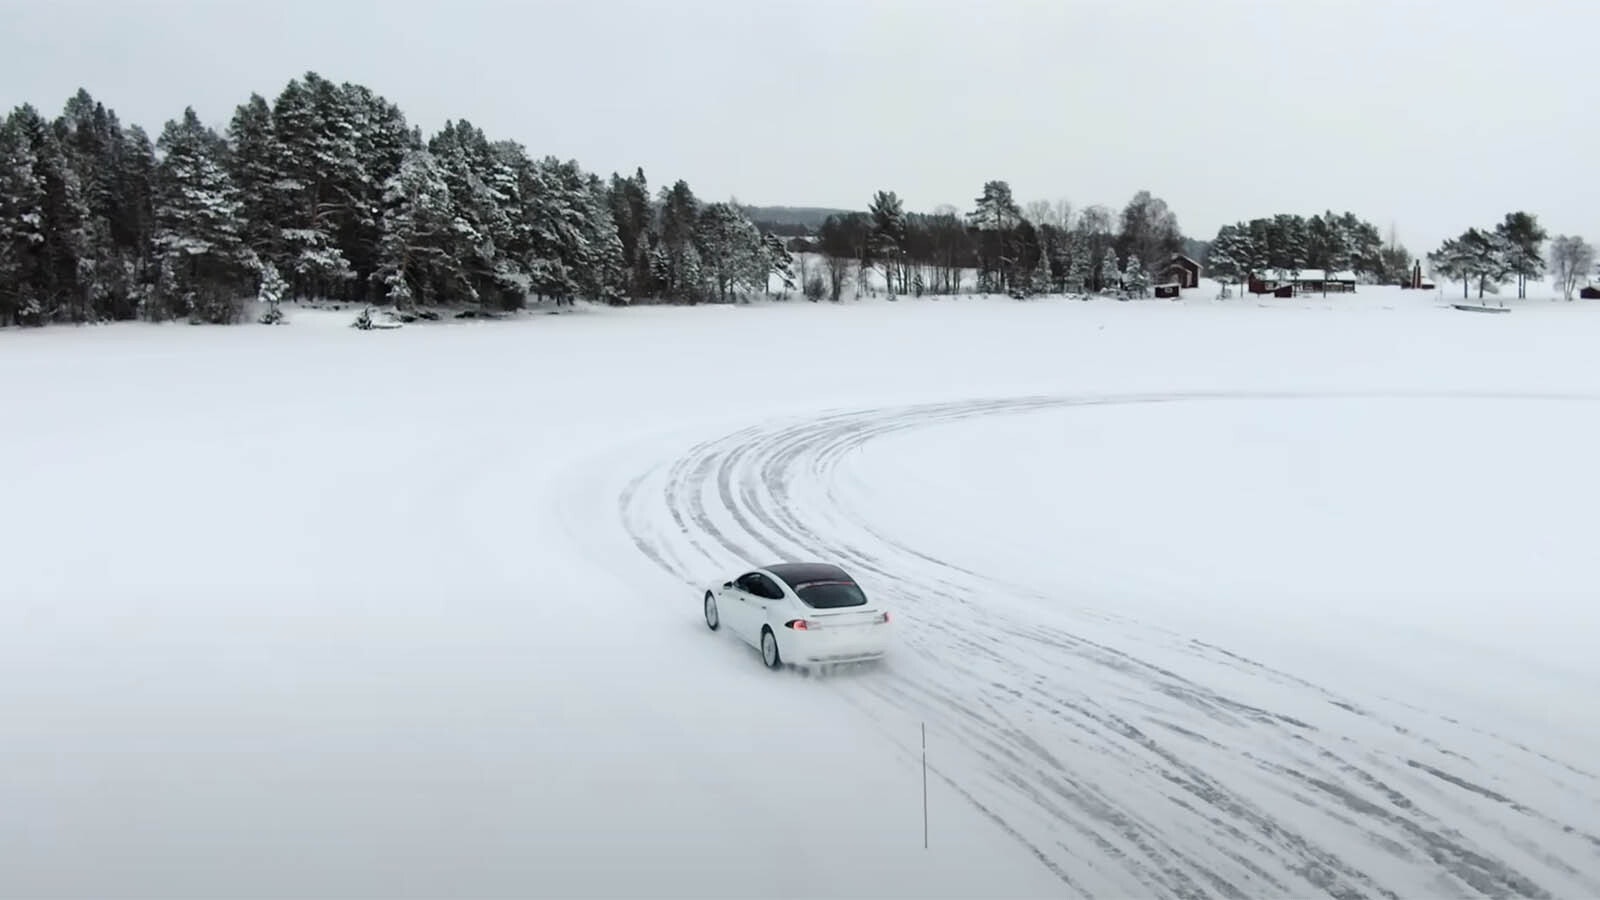 Tesla in snow 12 13 22